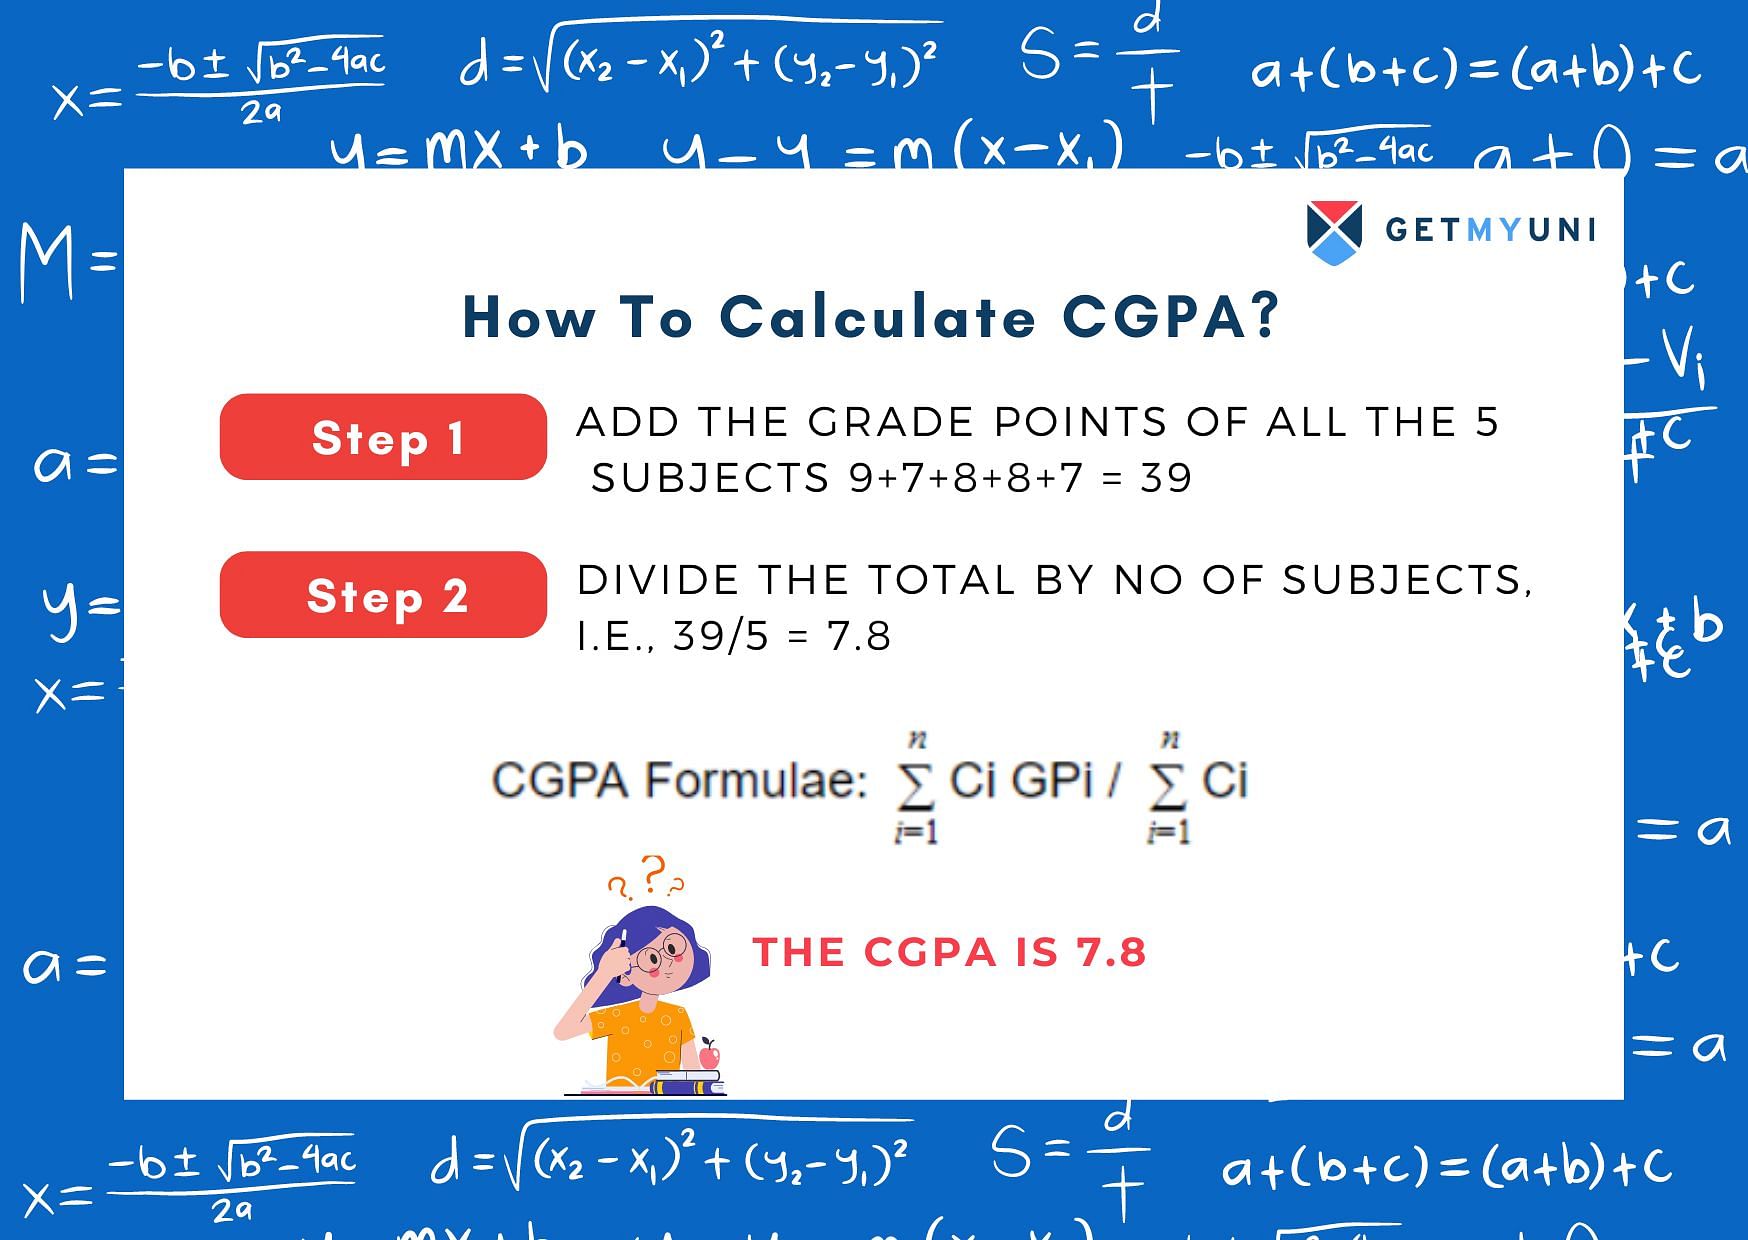 Steps to Calculate CGPA